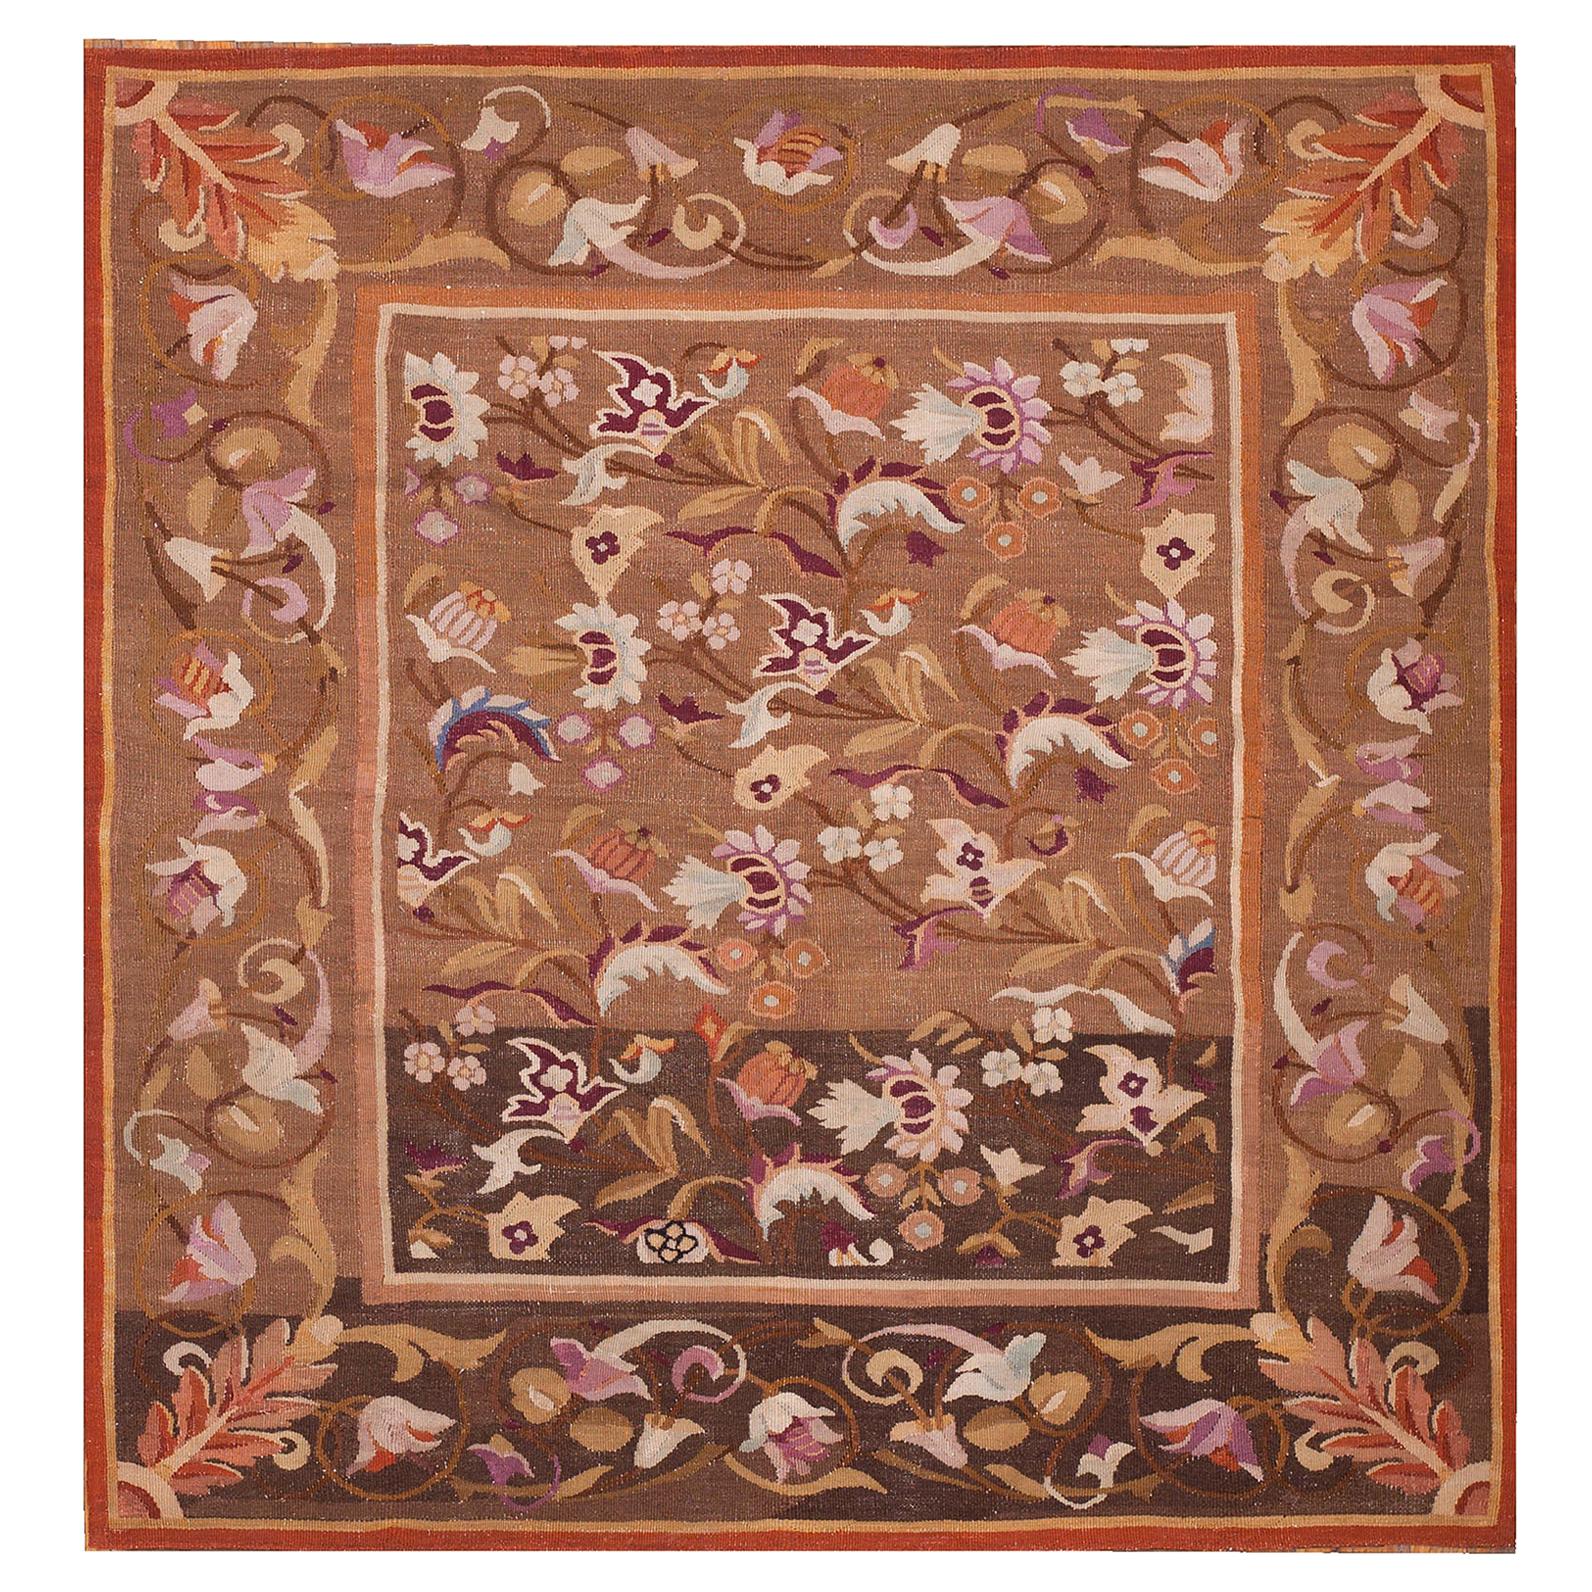 Antique French Aubusson Carpet -  Louis Philippe - Period For Sale